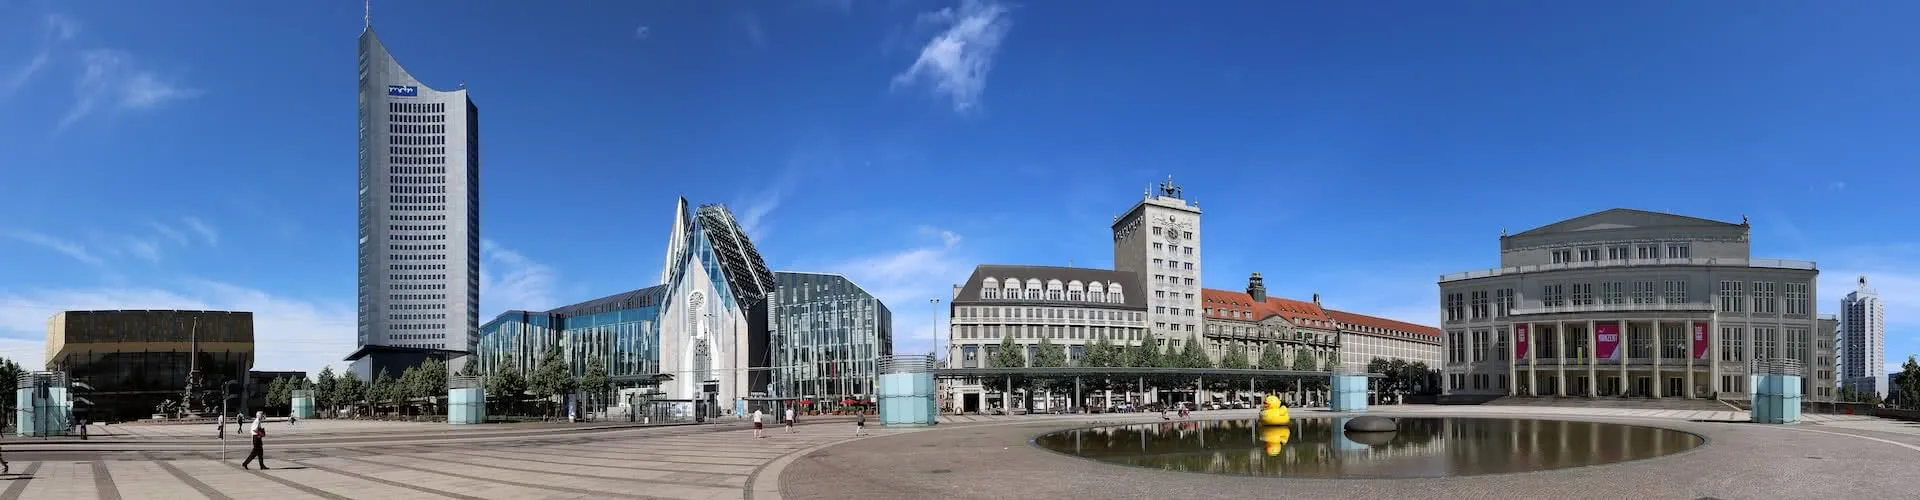 Leipzig - the destination for school trips